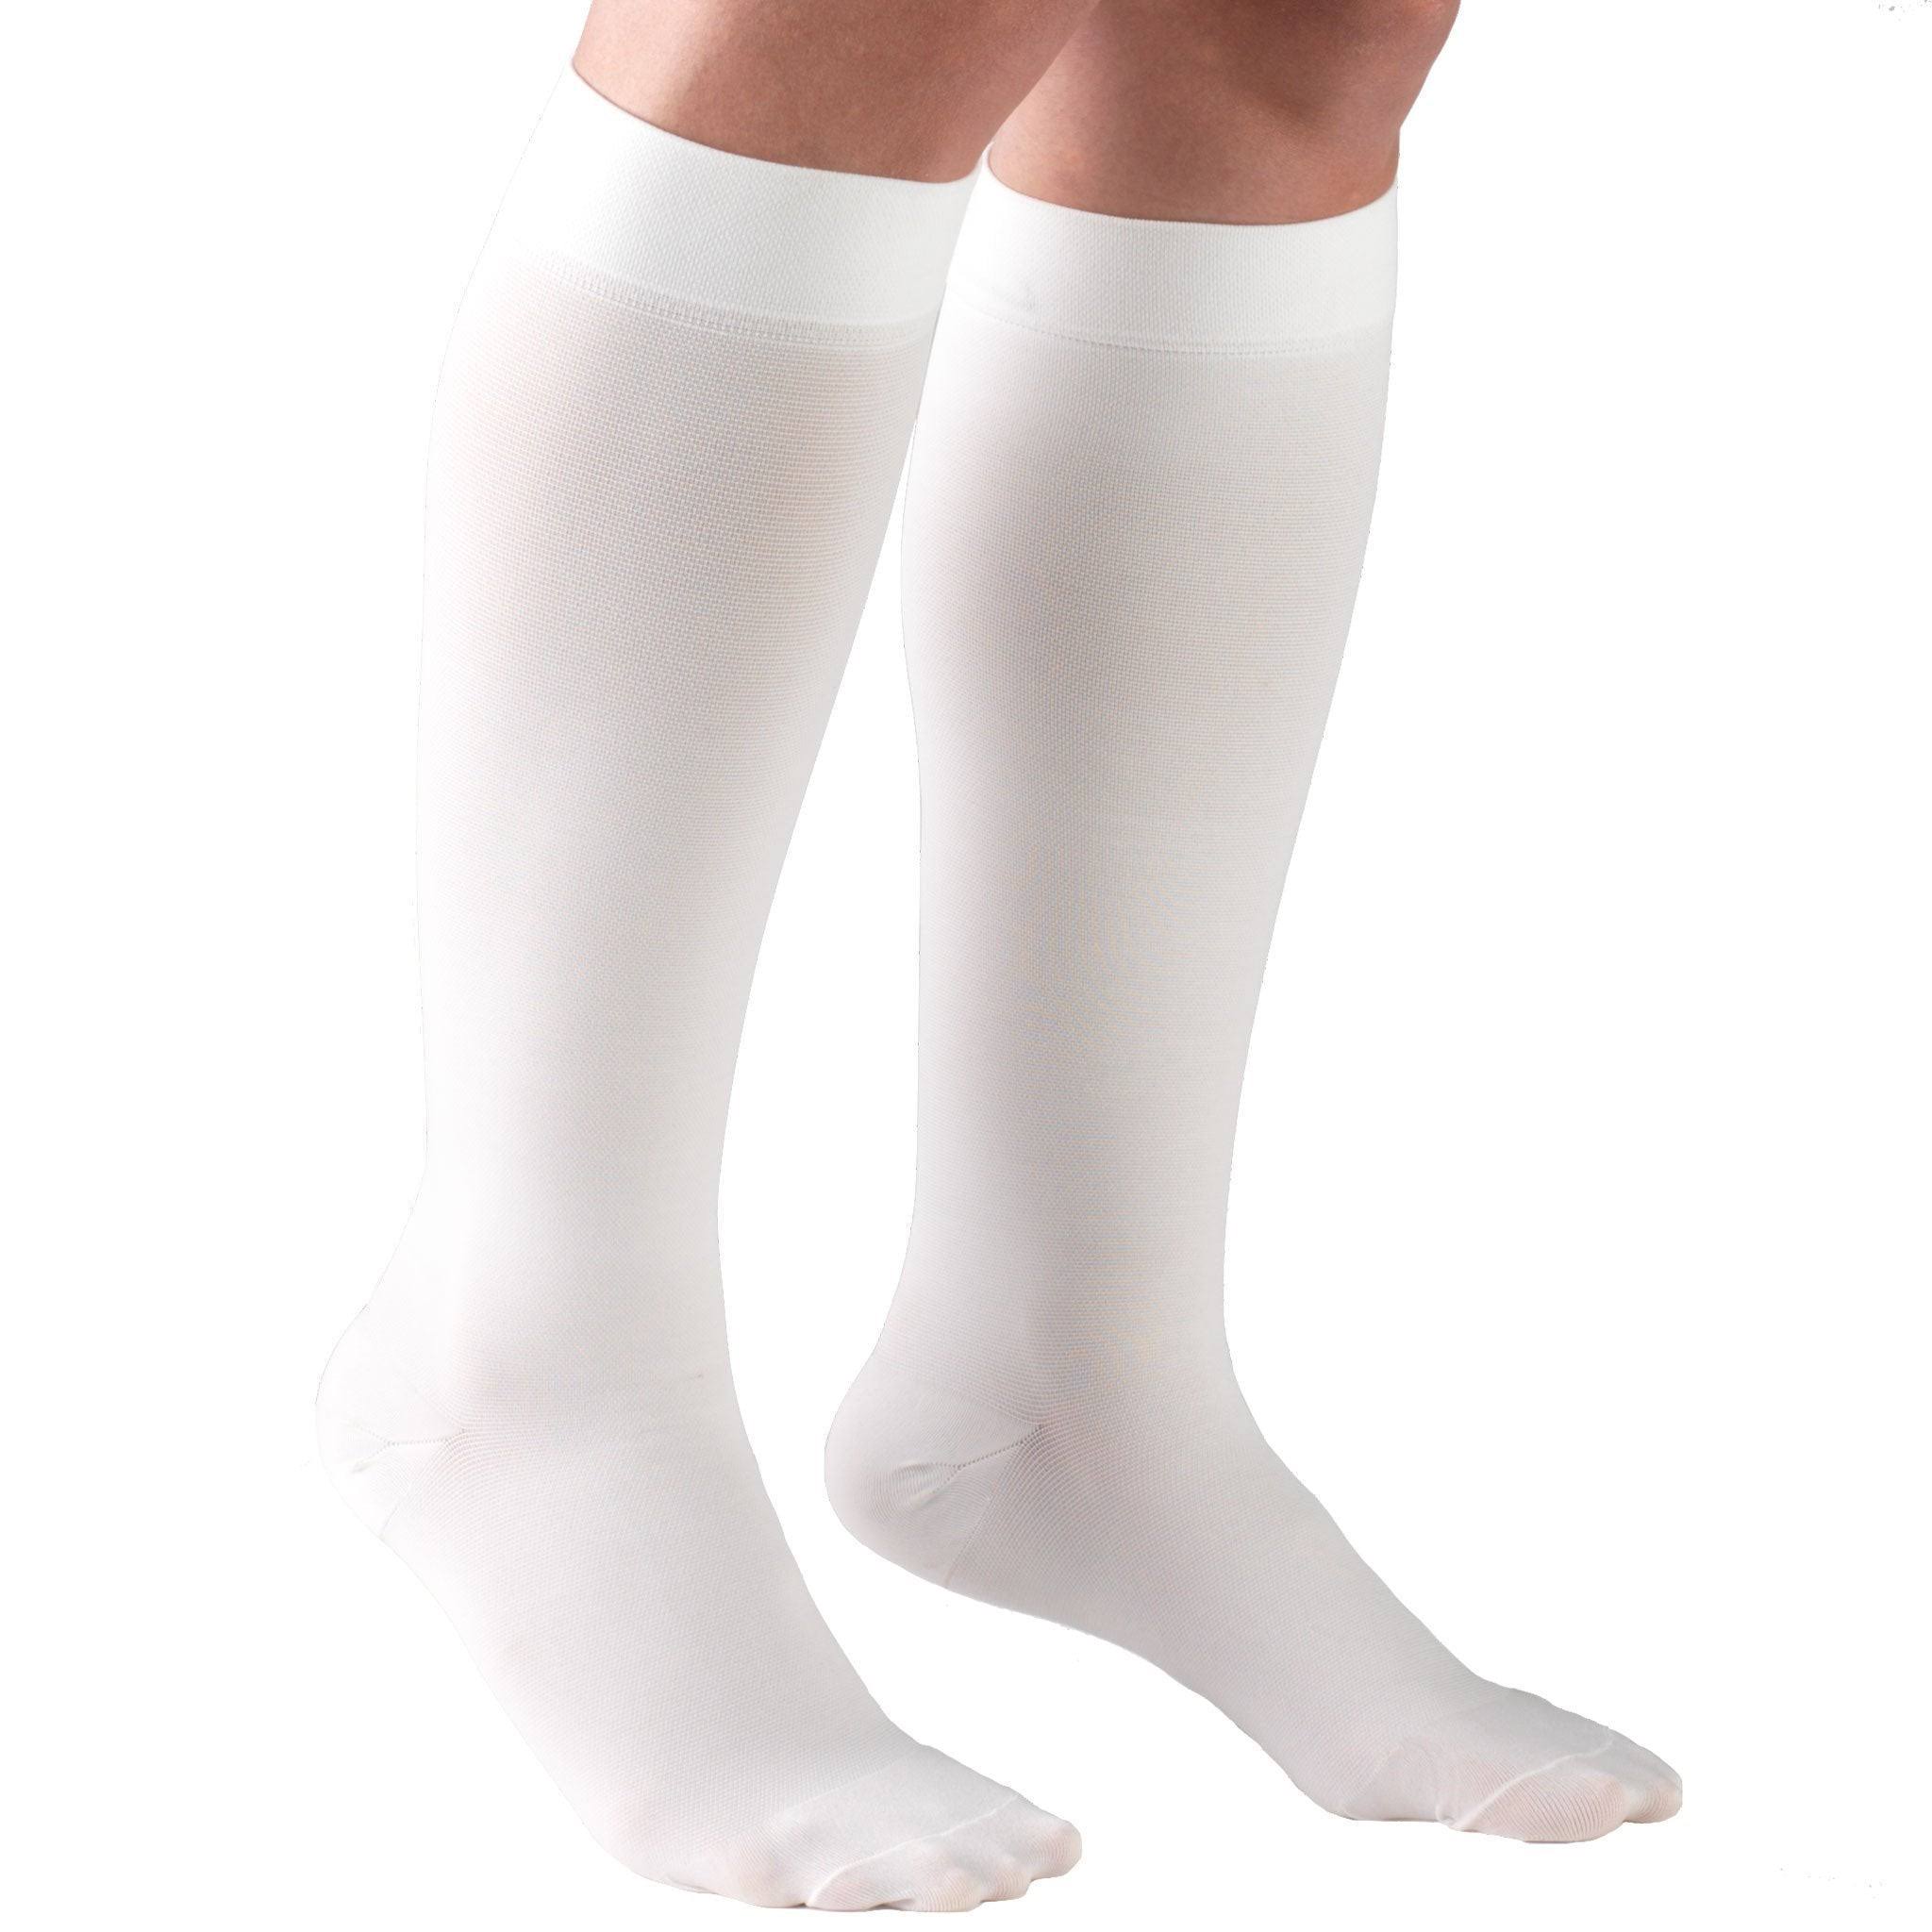 Truform Below Knee Closed Toe Compression Stockings - Small, Black